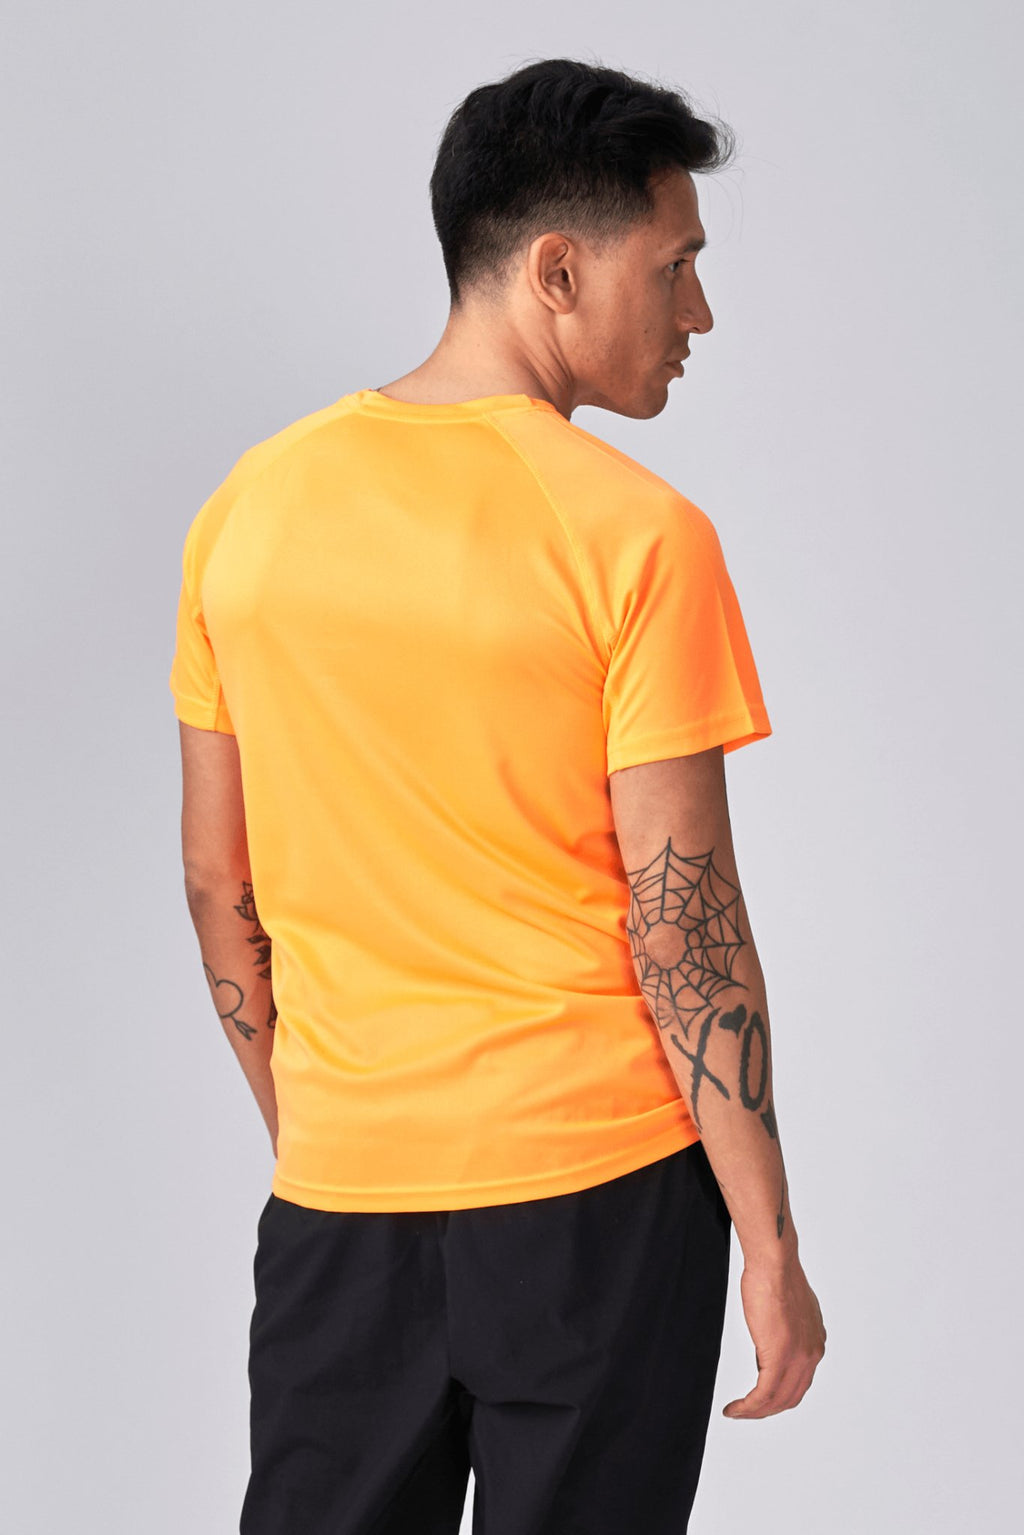 T-shirt d'entraînement - Orange